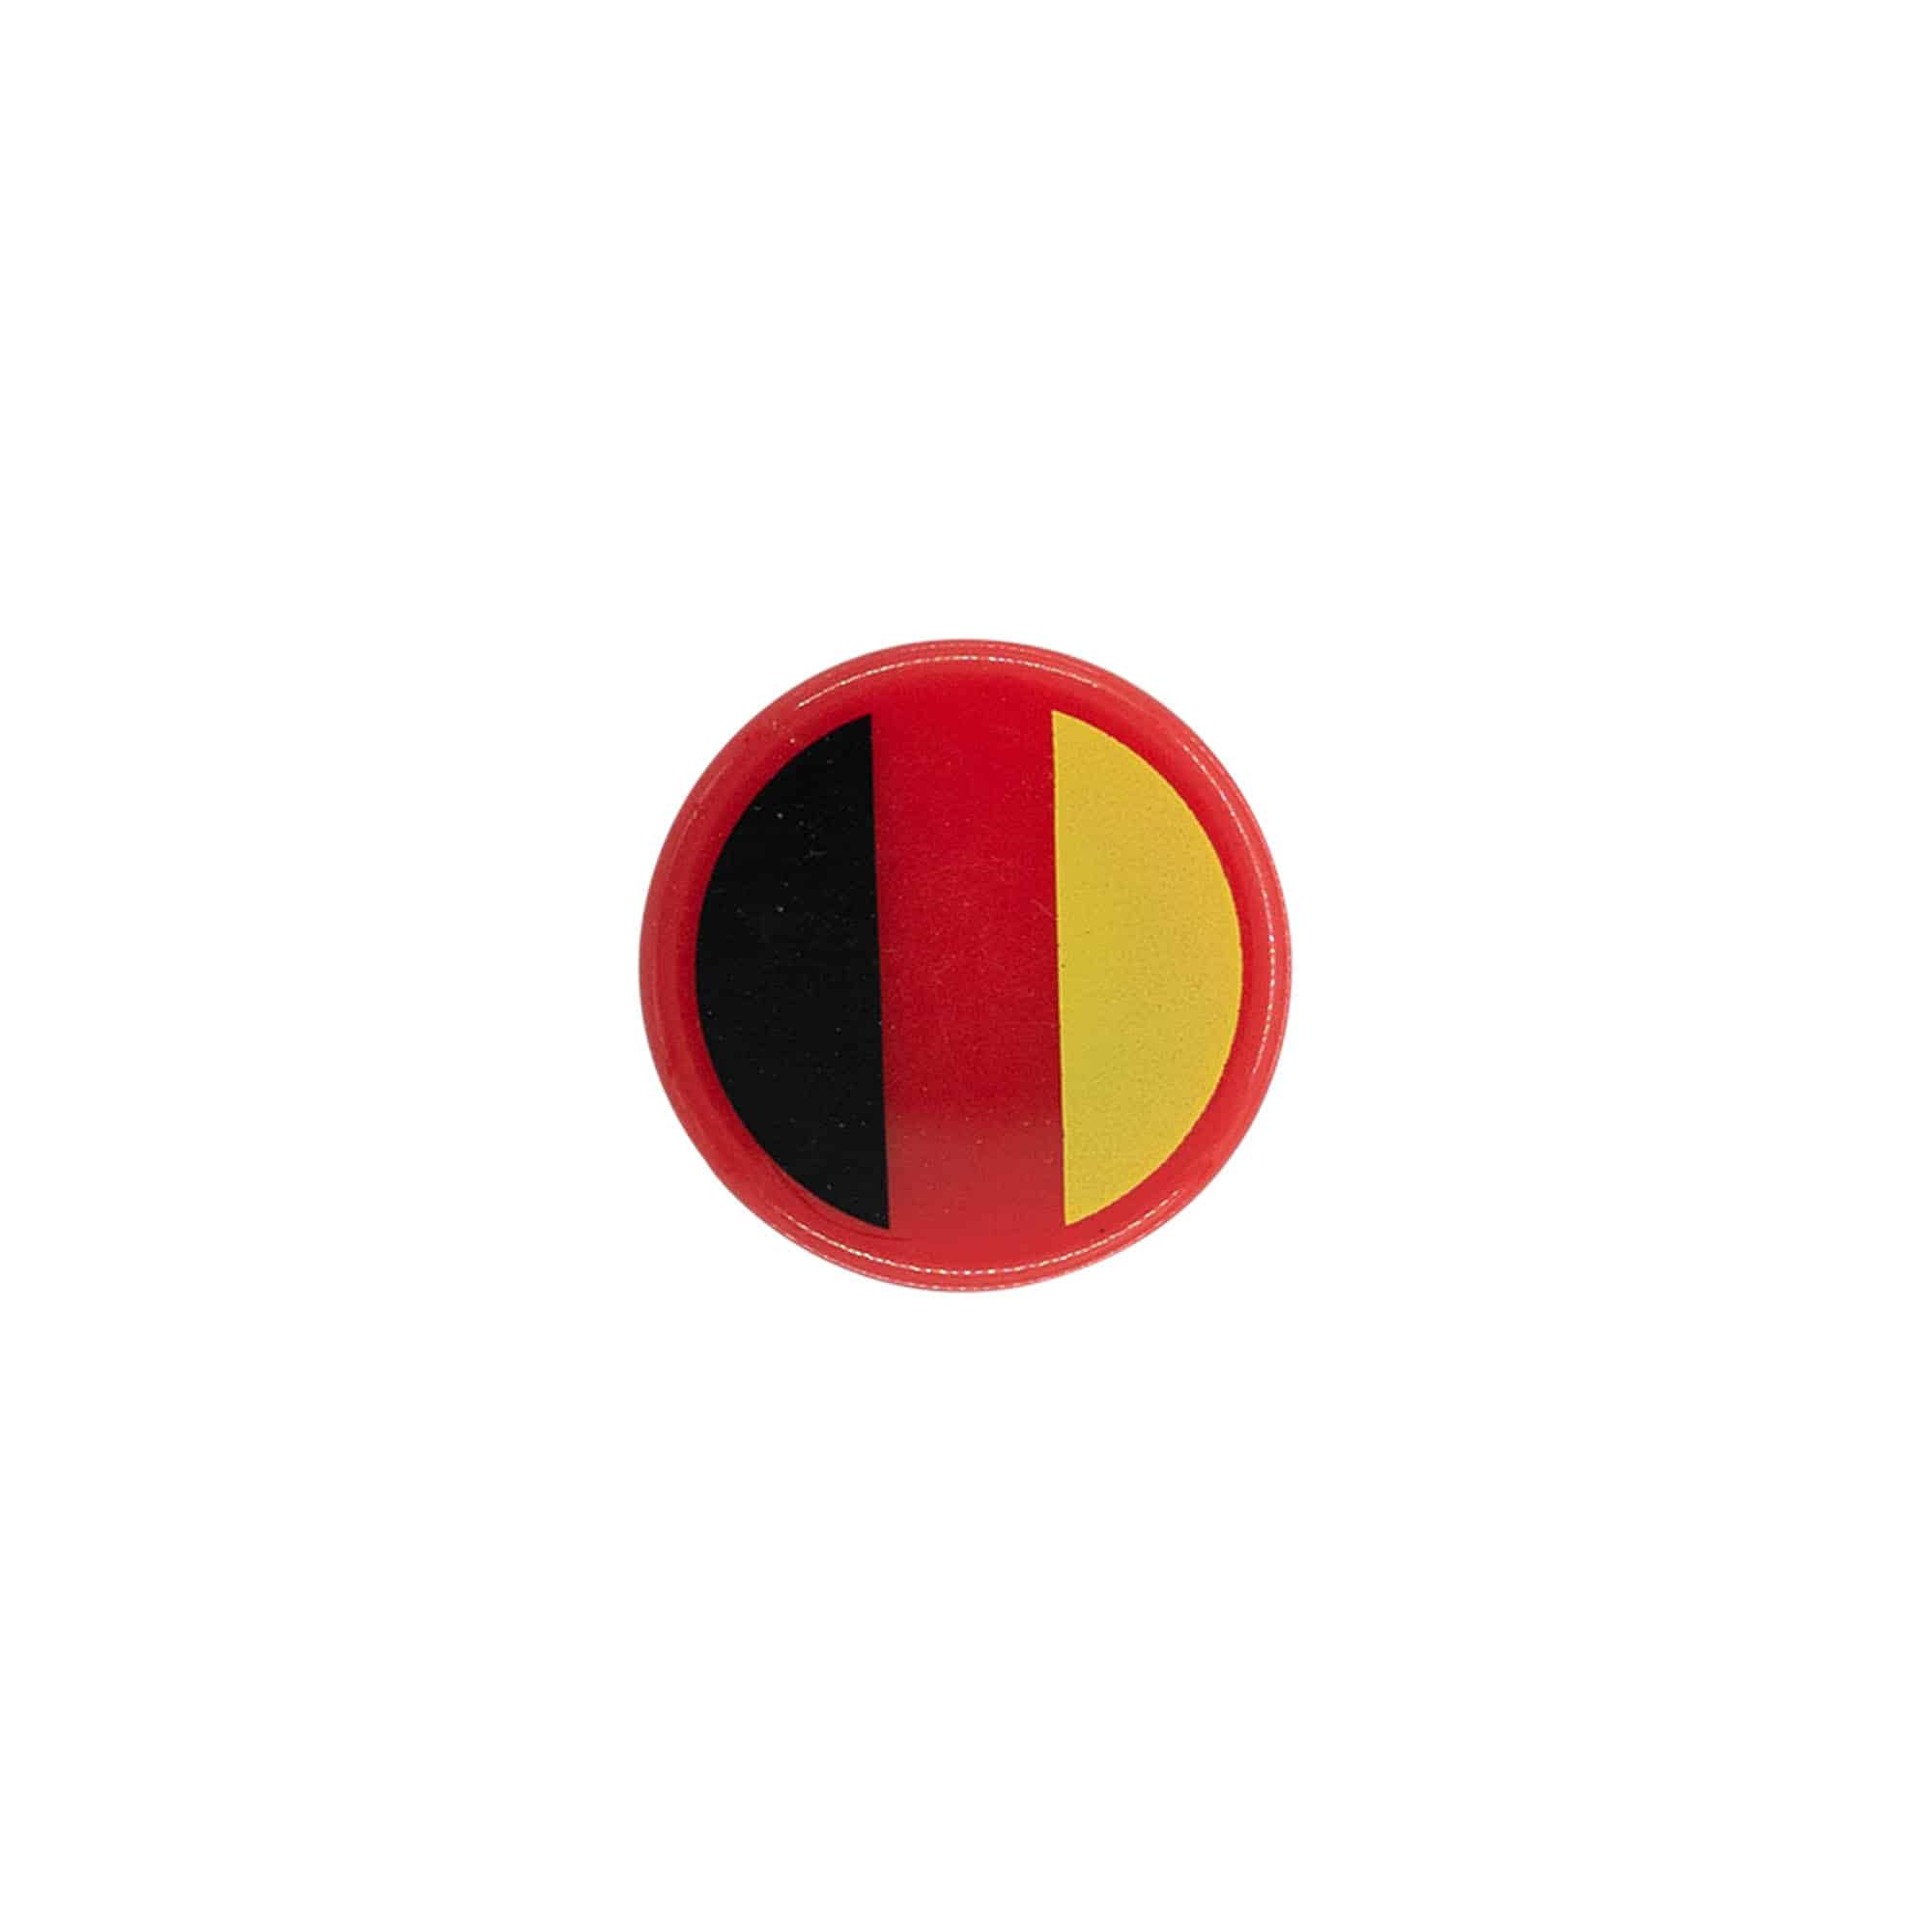 Korek s úchytem 19 mm 'Německo', plast, barevný, pro ústí: korek